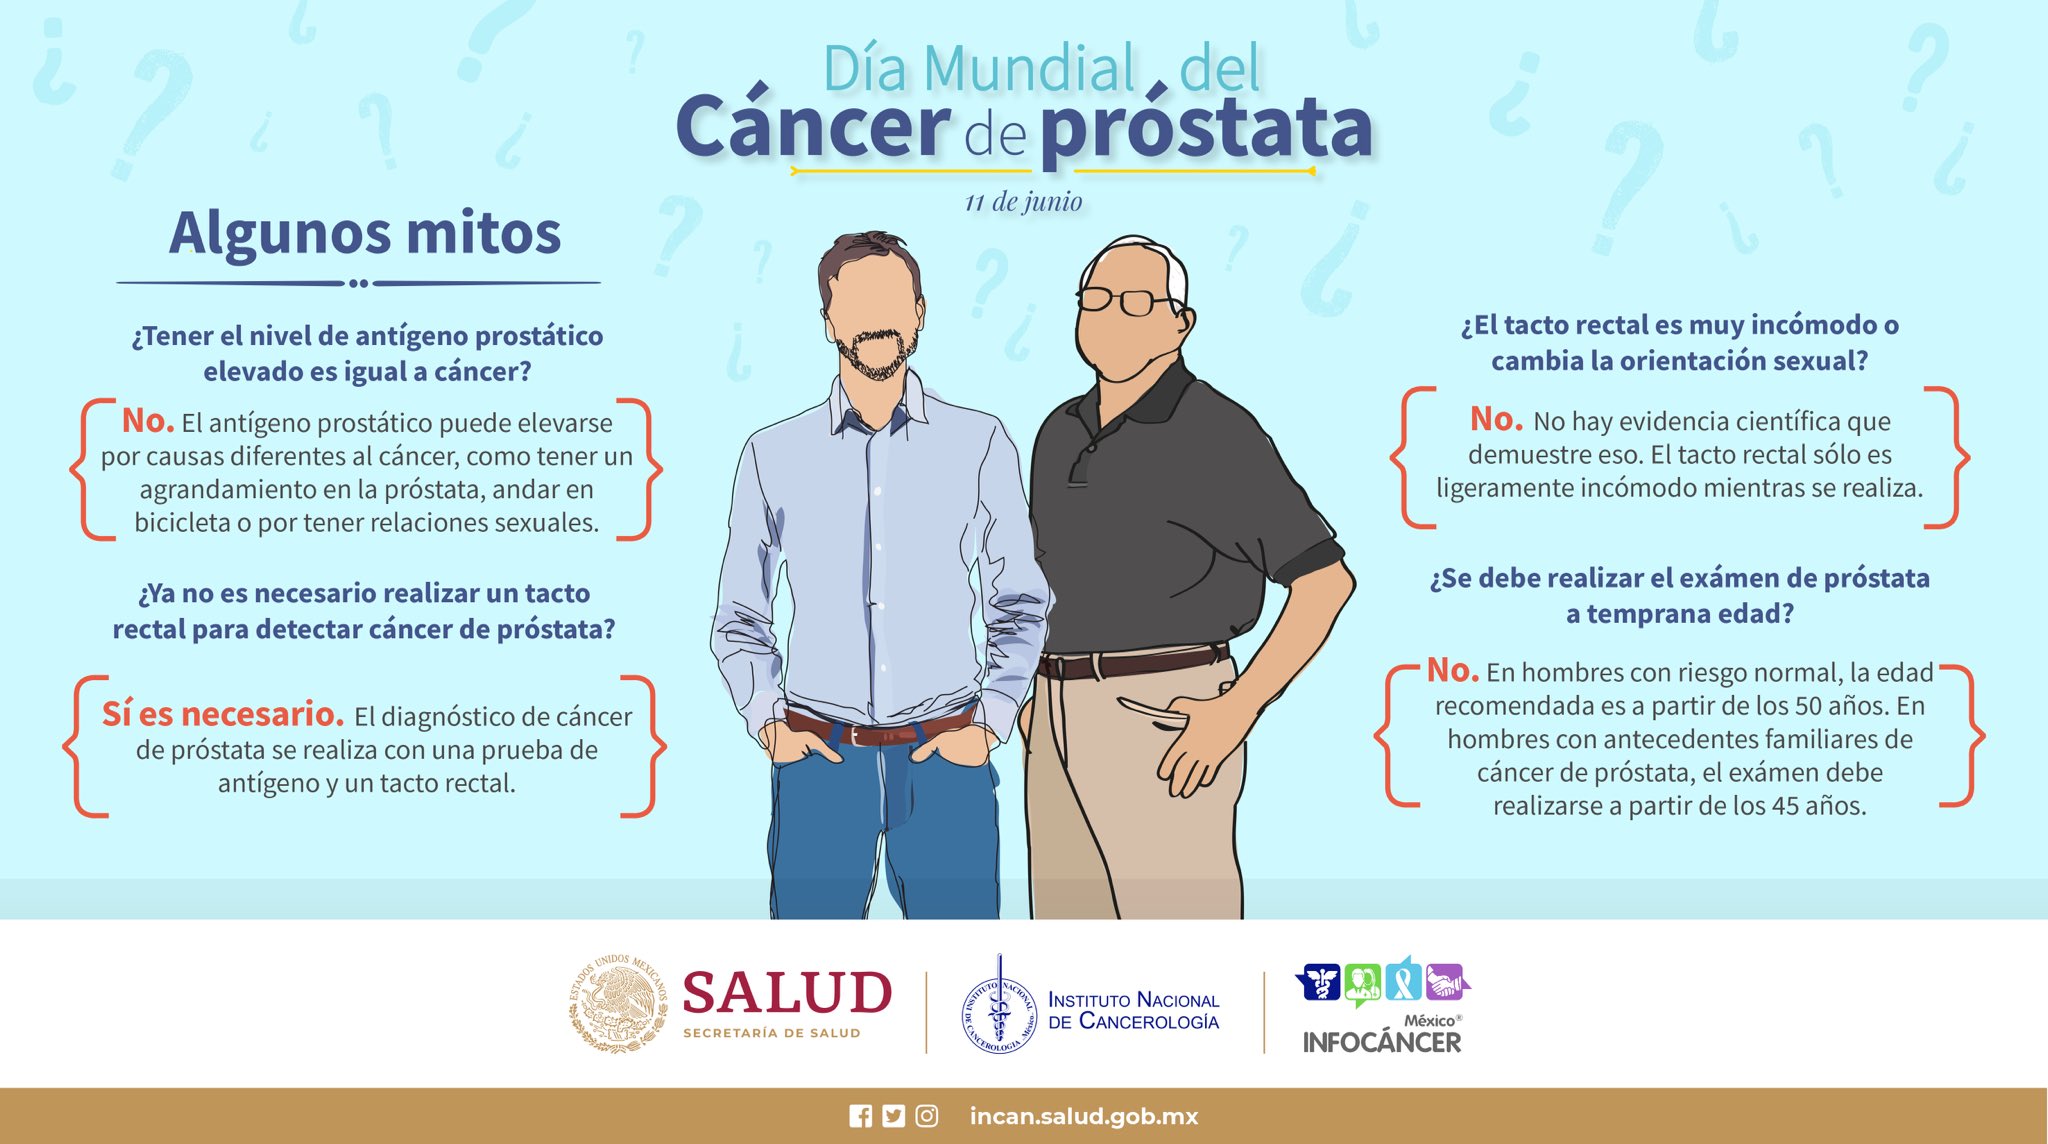 examen de la próstata tacto rectal cancer prostata etapa 6